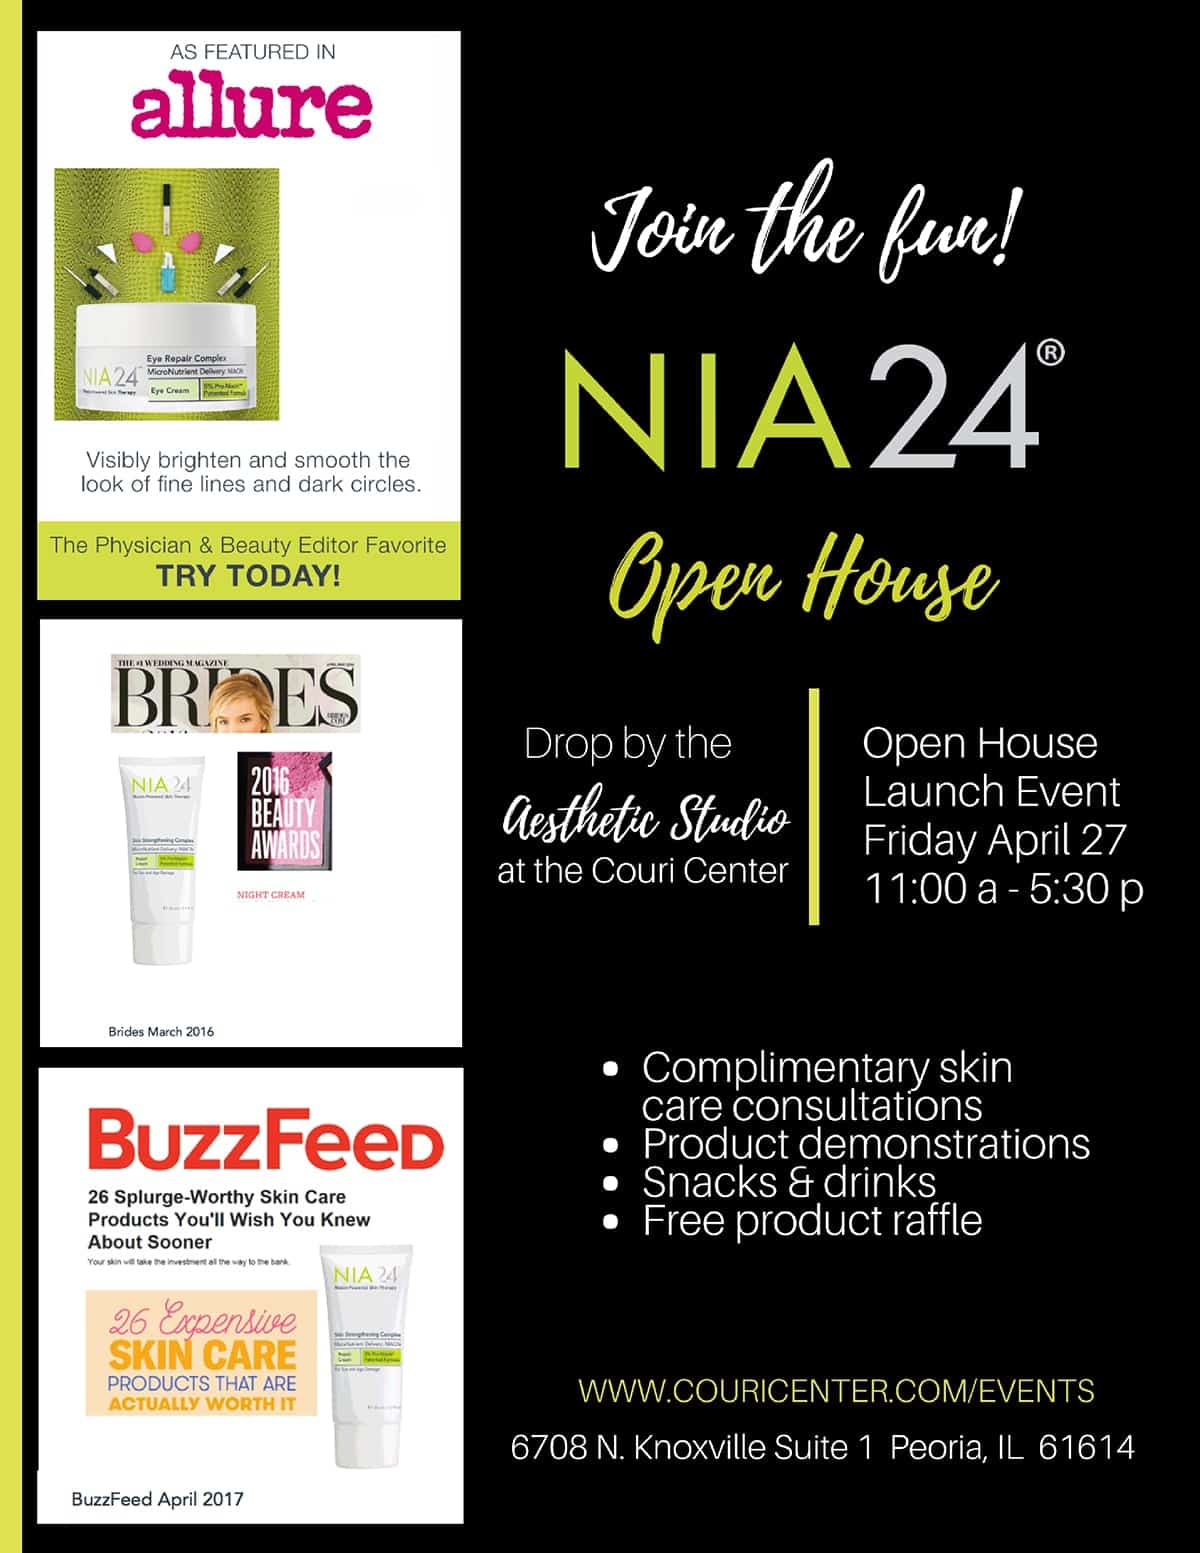 April 2018 NIA24 Open House